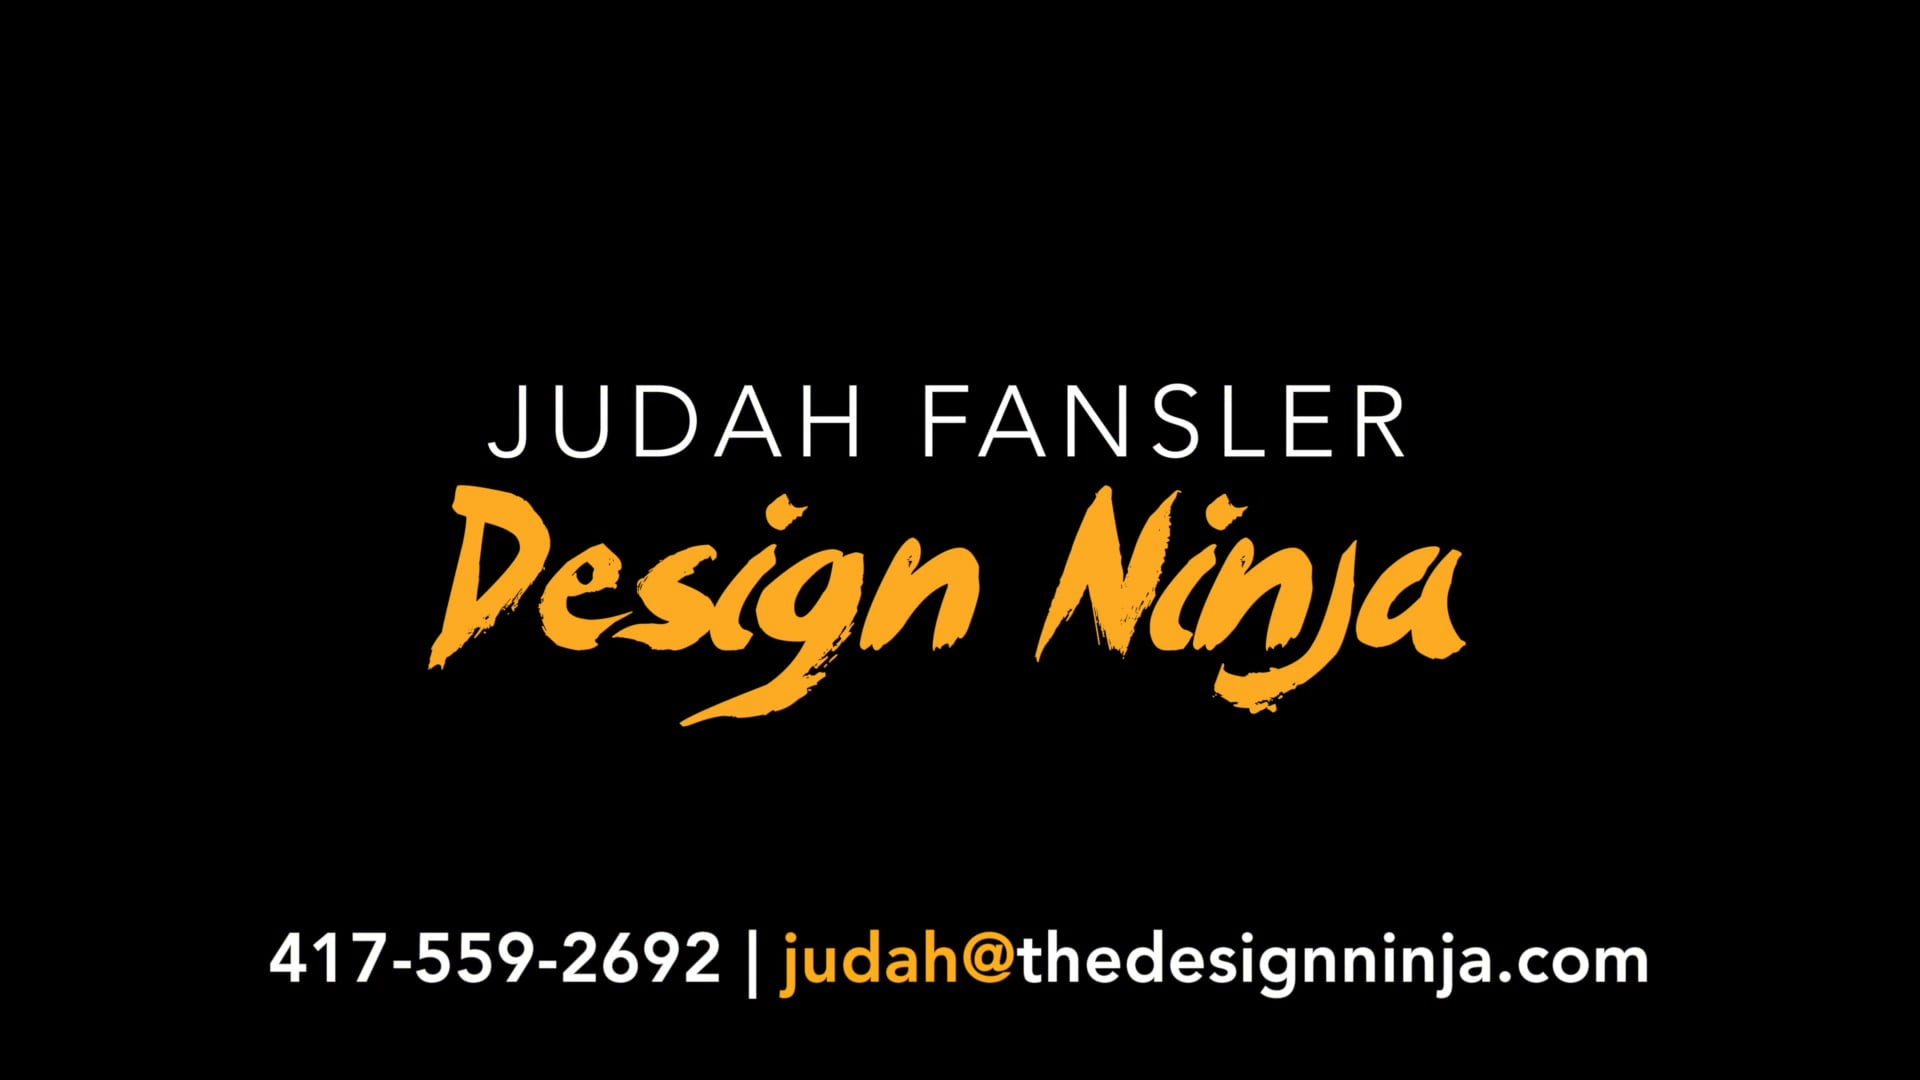 Design Ninja: Hi, I'm Judah